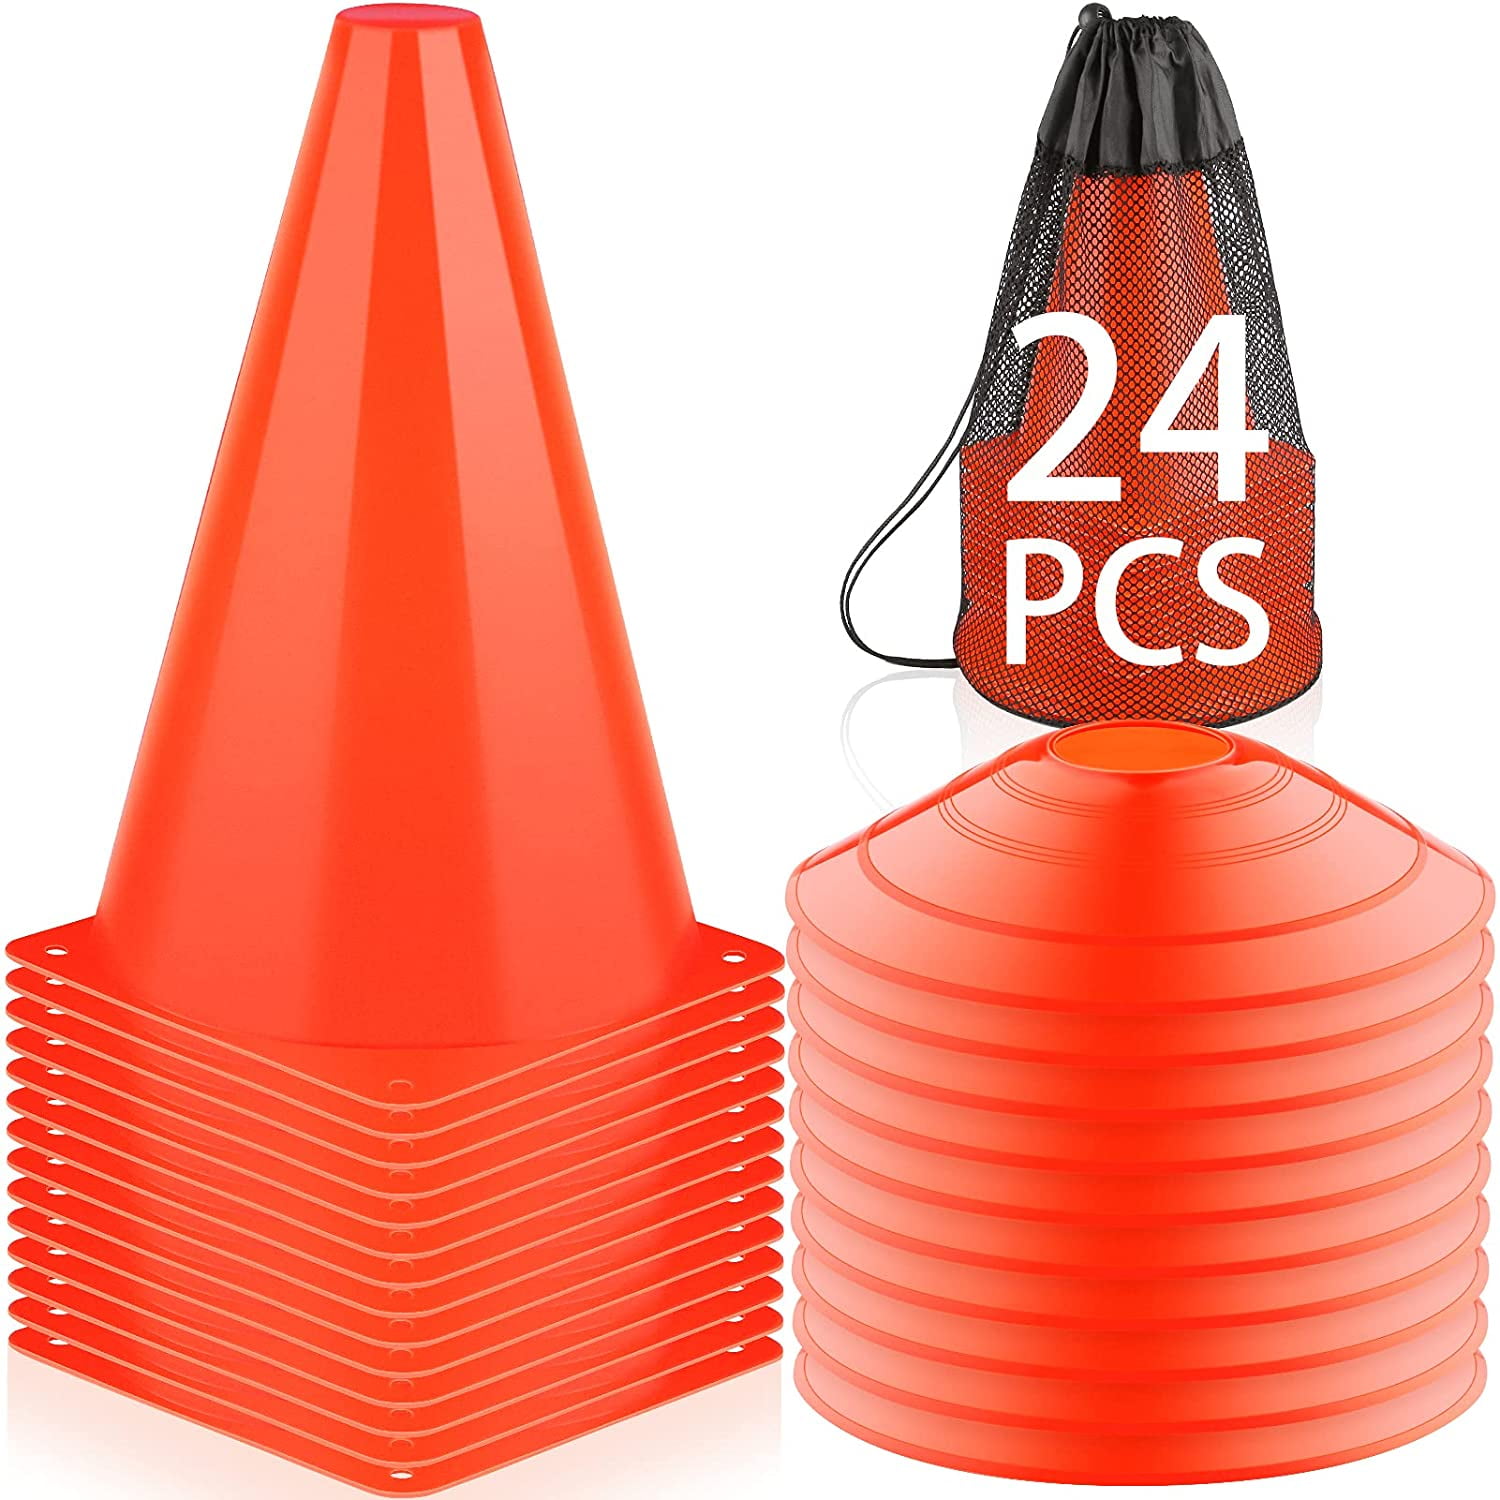 basketball training cones